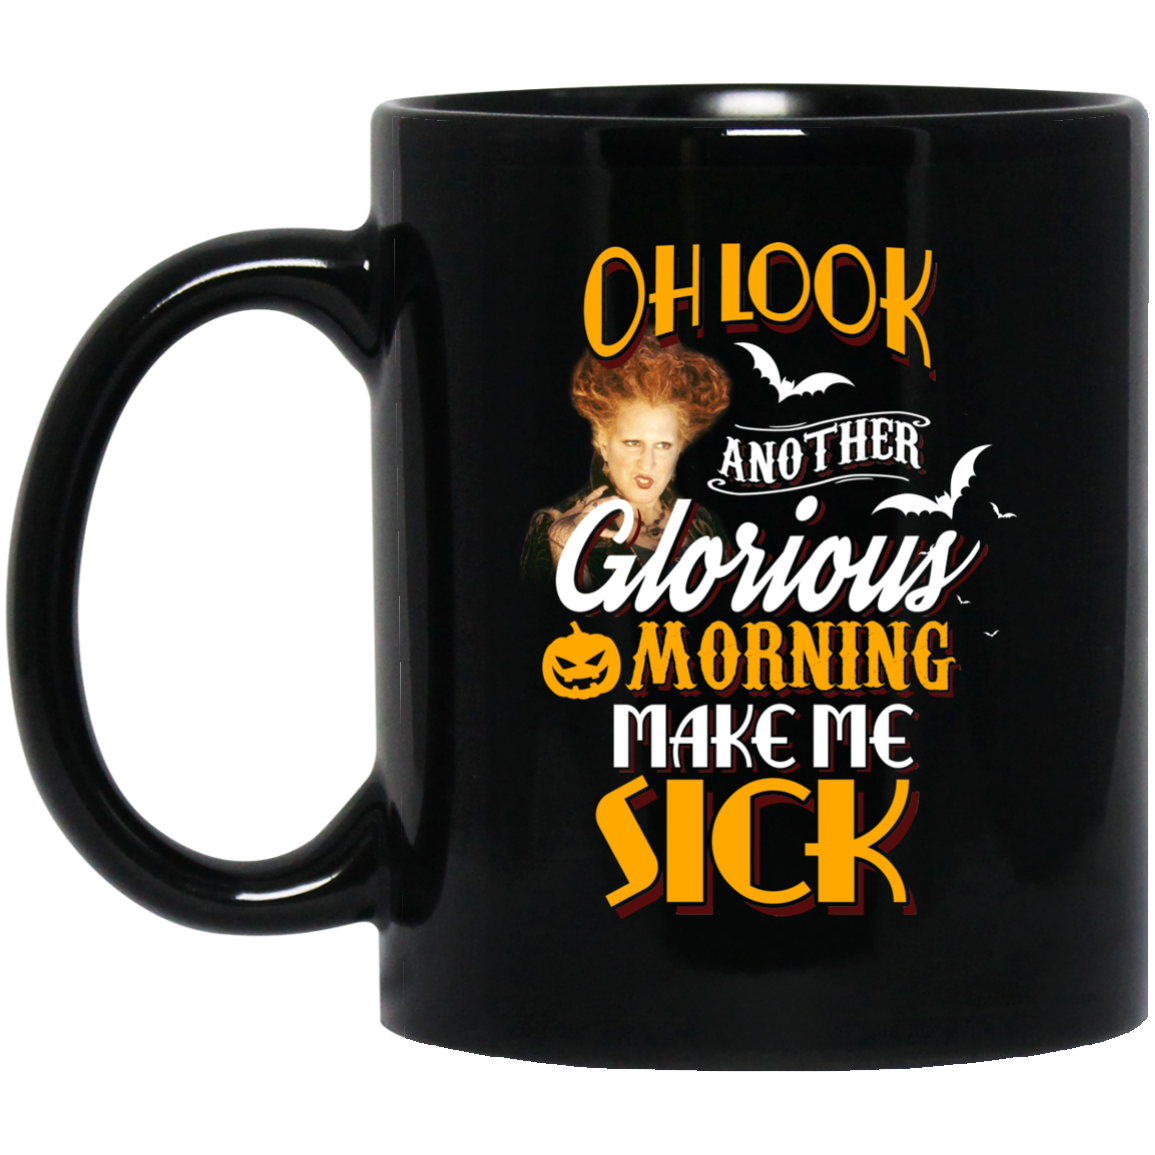 Hocus Pocus: Oh look another glorious morning make me sick mugs